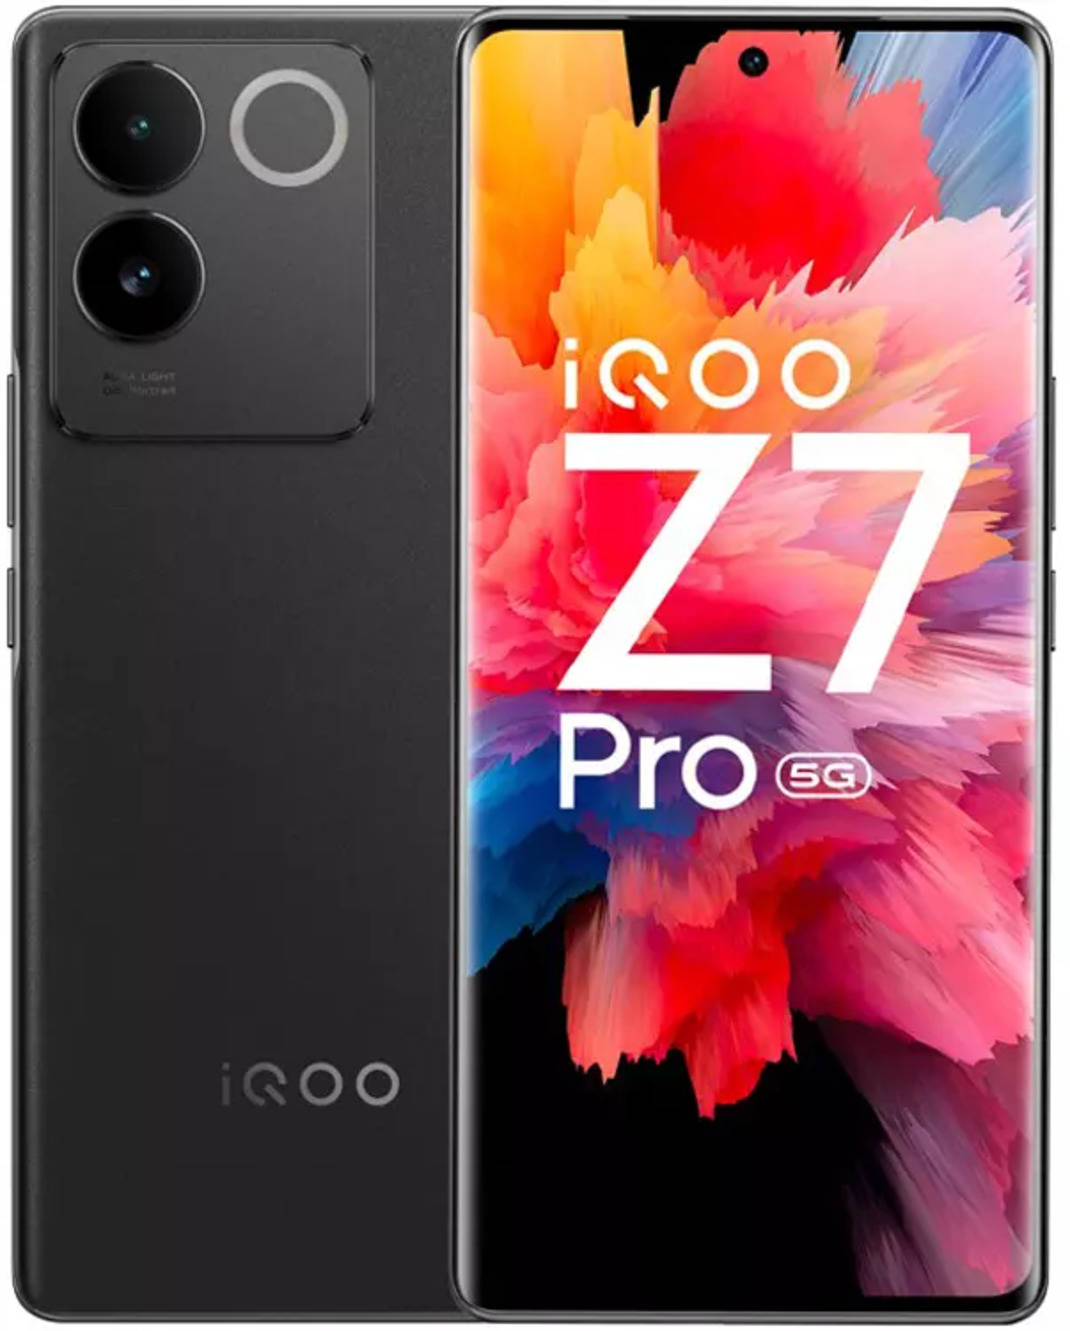 Iqoo Z7 Pro Vs Iqoo Z7s 5g 128 Gb 8 Gb Compare Specifications Price Gadgets Now 8340